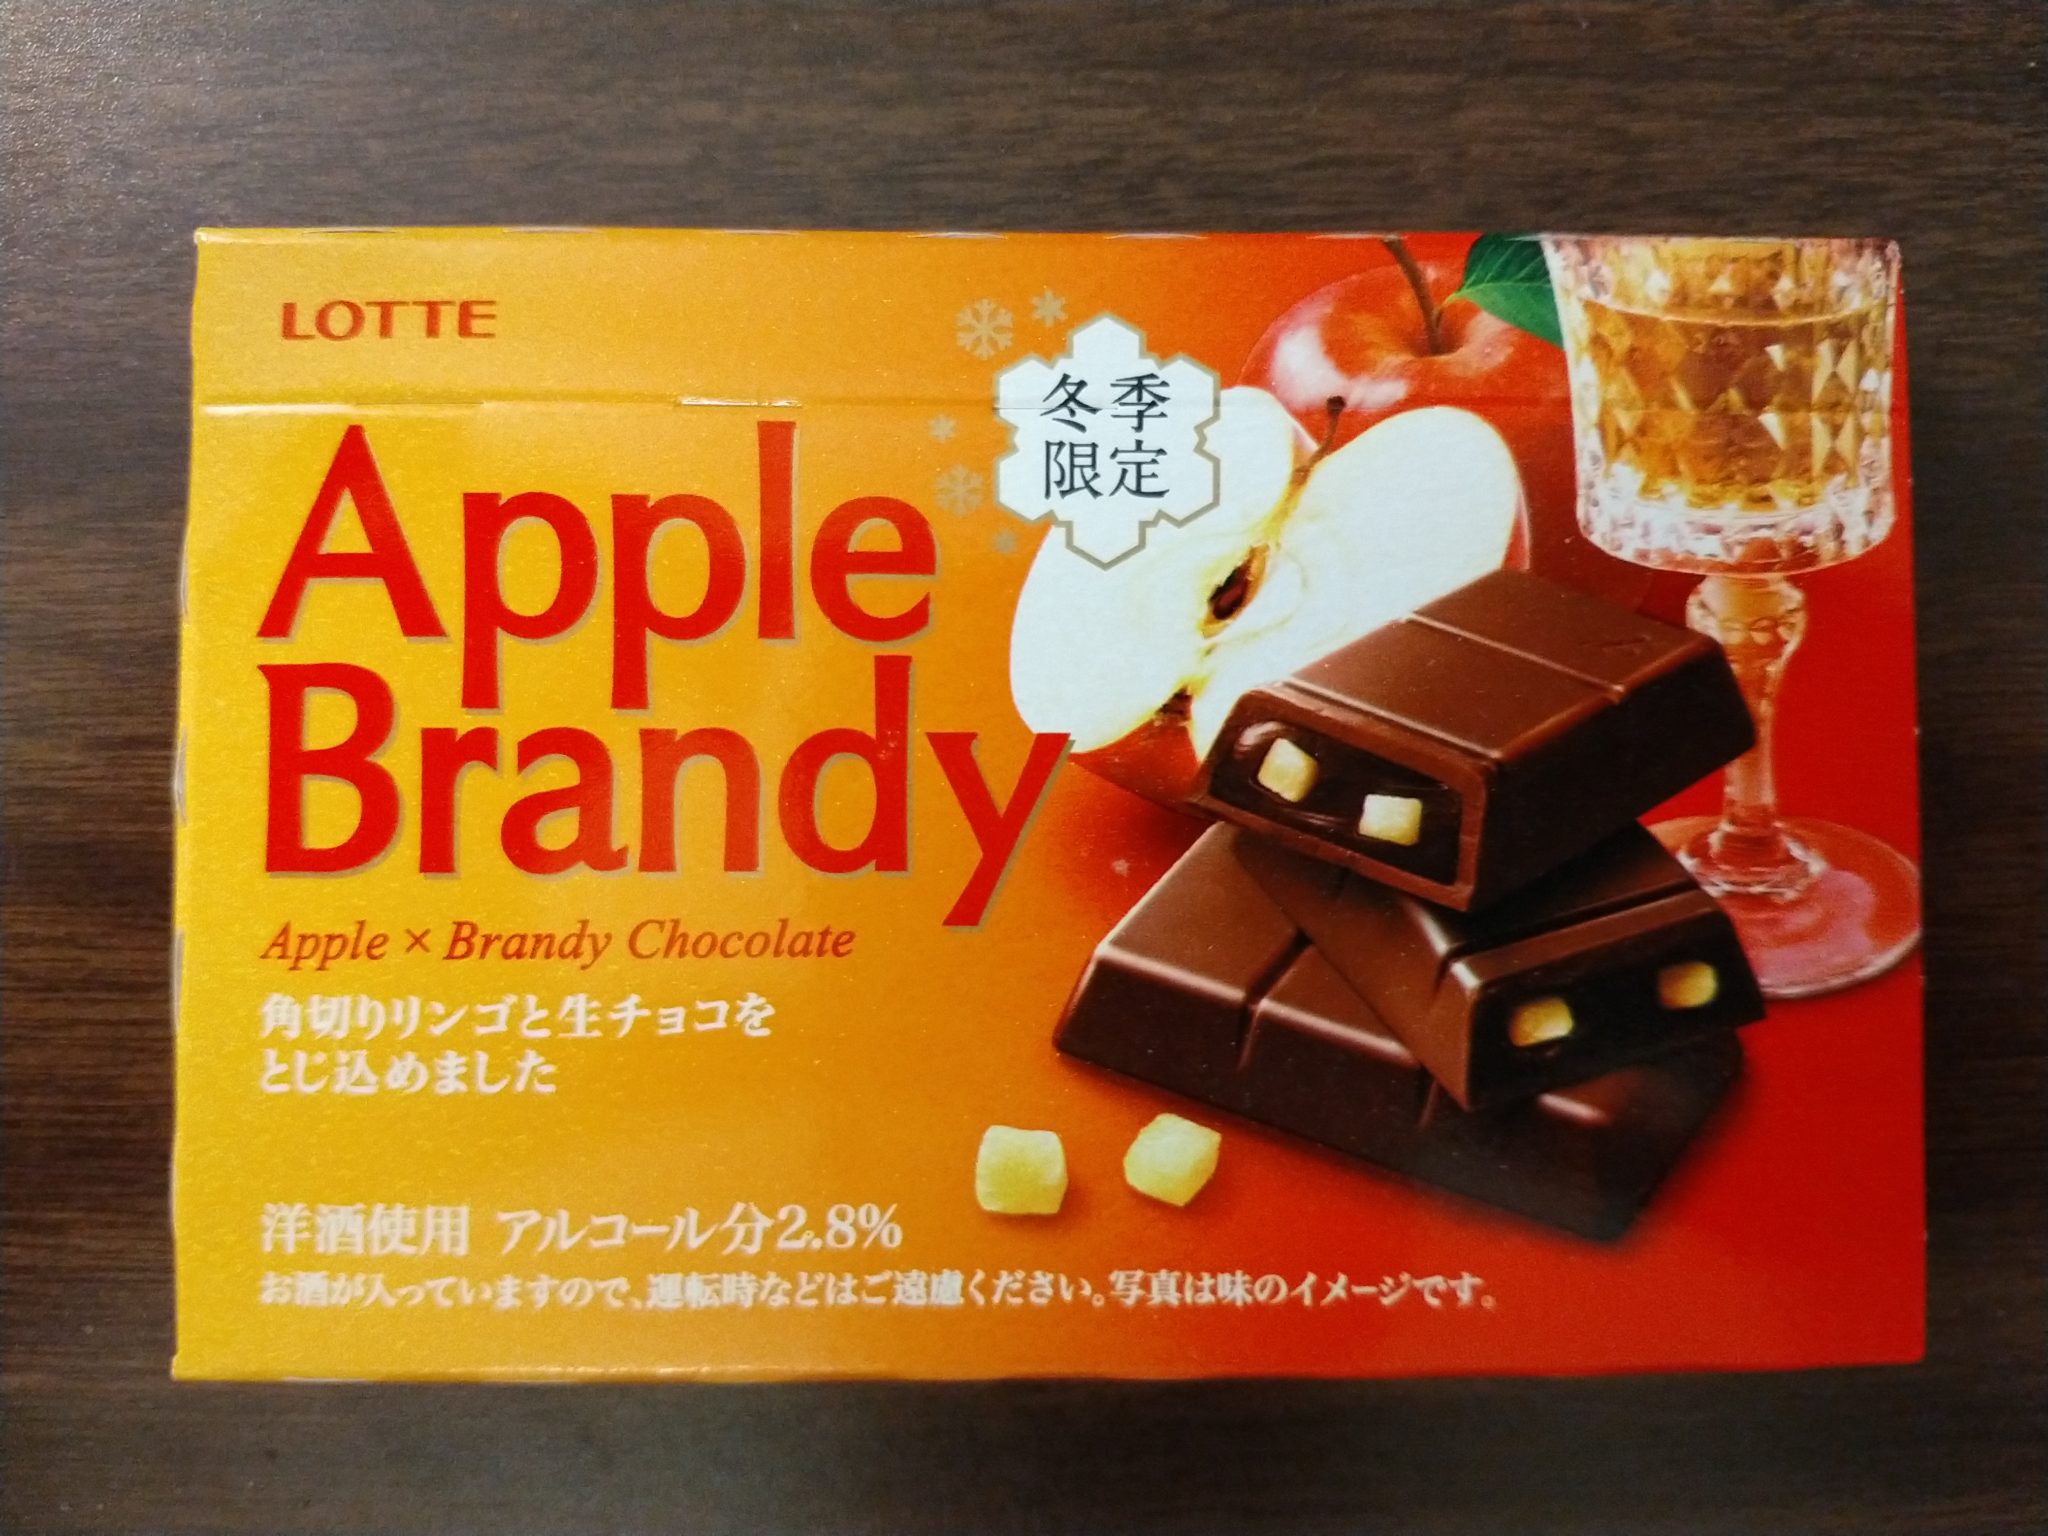 Lotte – Apple Brandy Chocolate